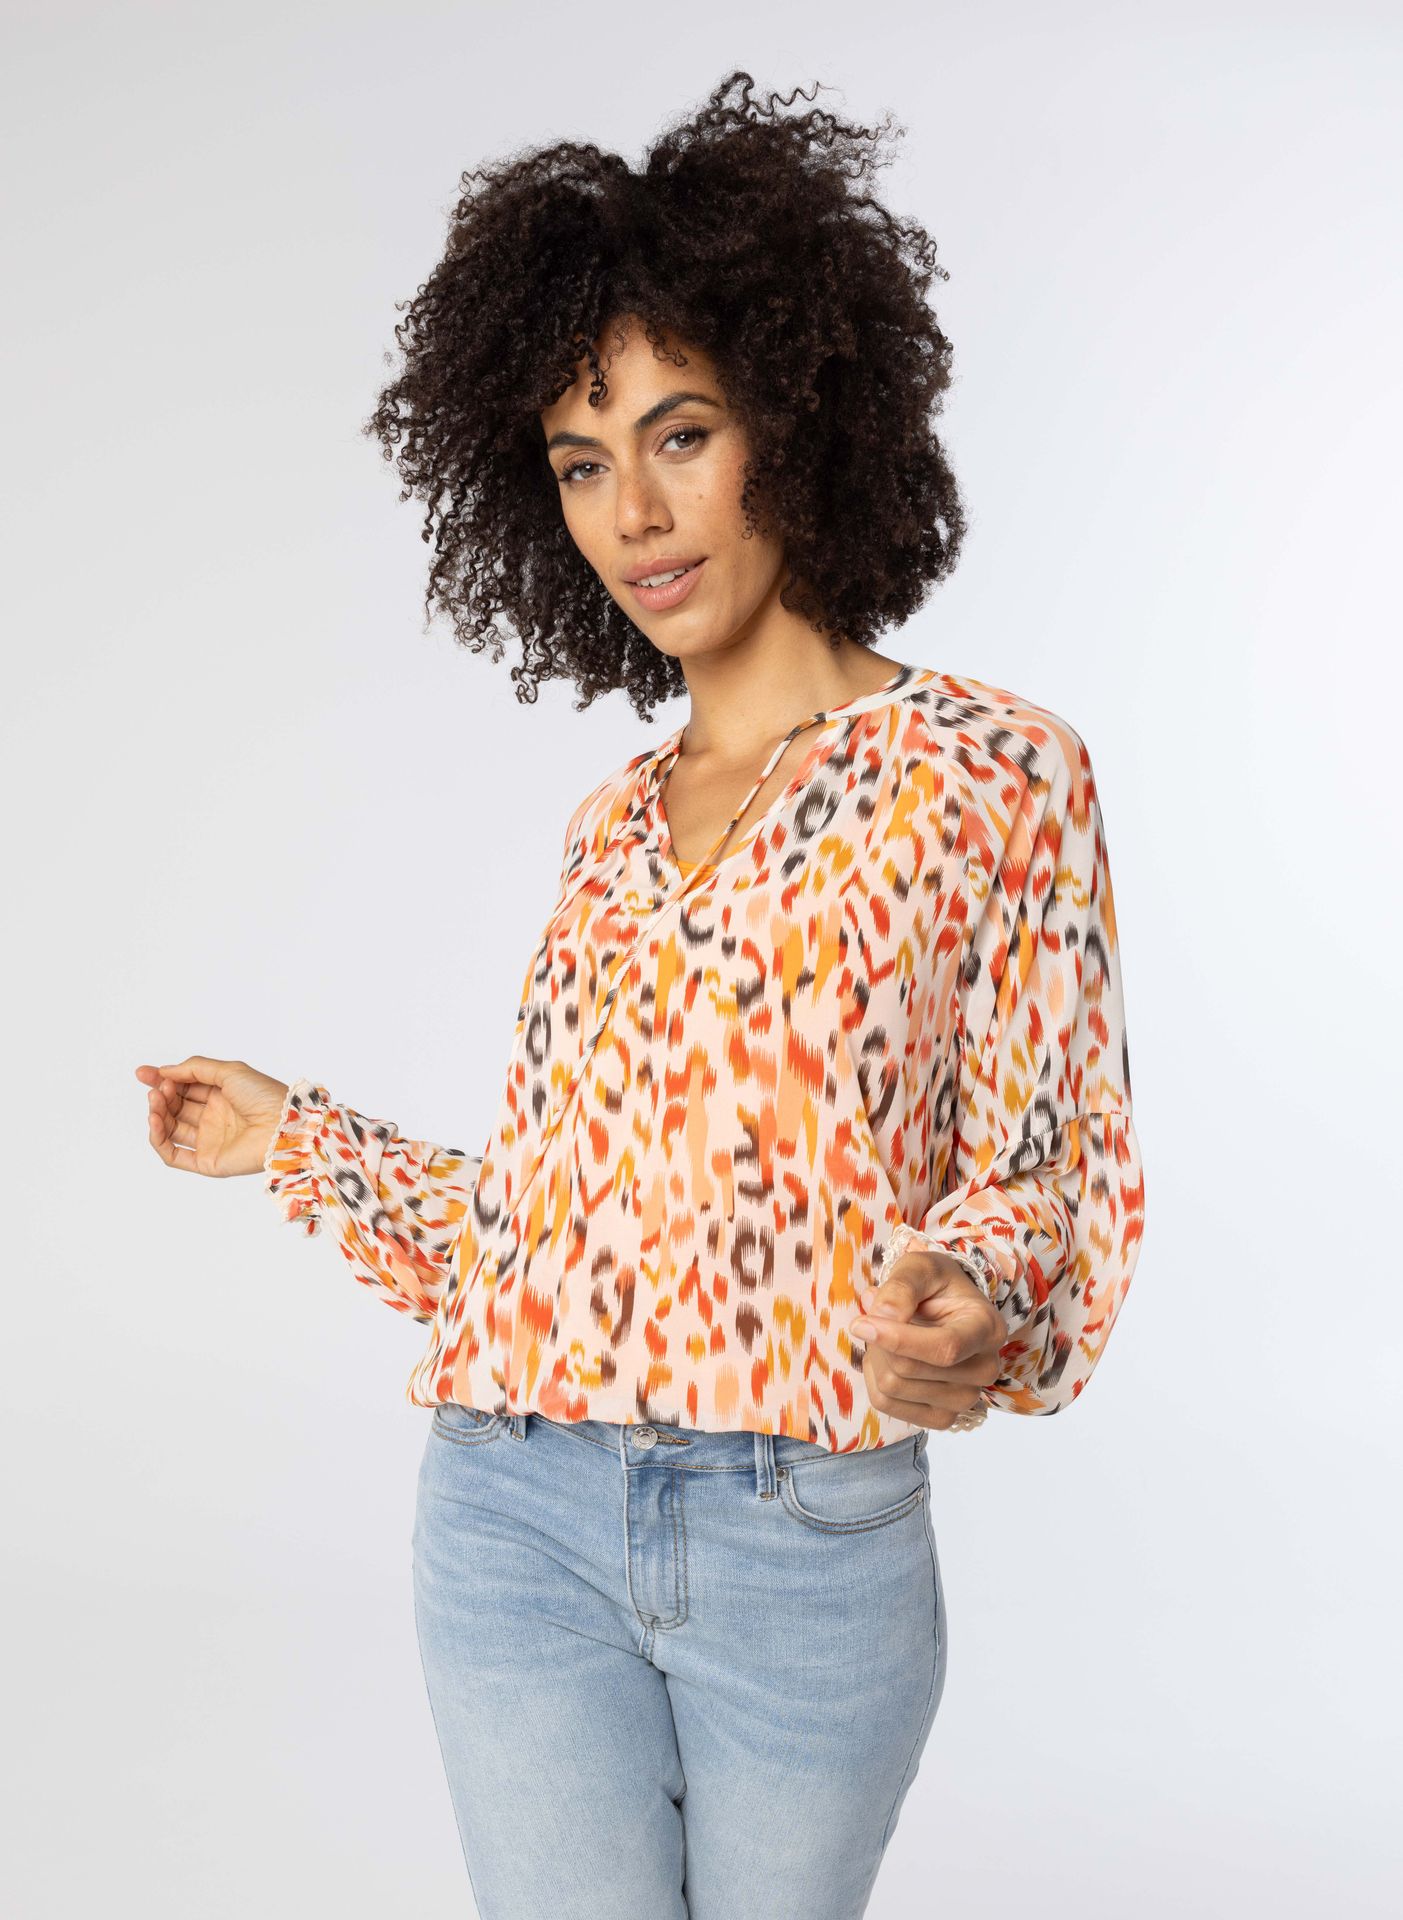 Norah Meerkleurige blouse met koordjes multicolor 213697-002